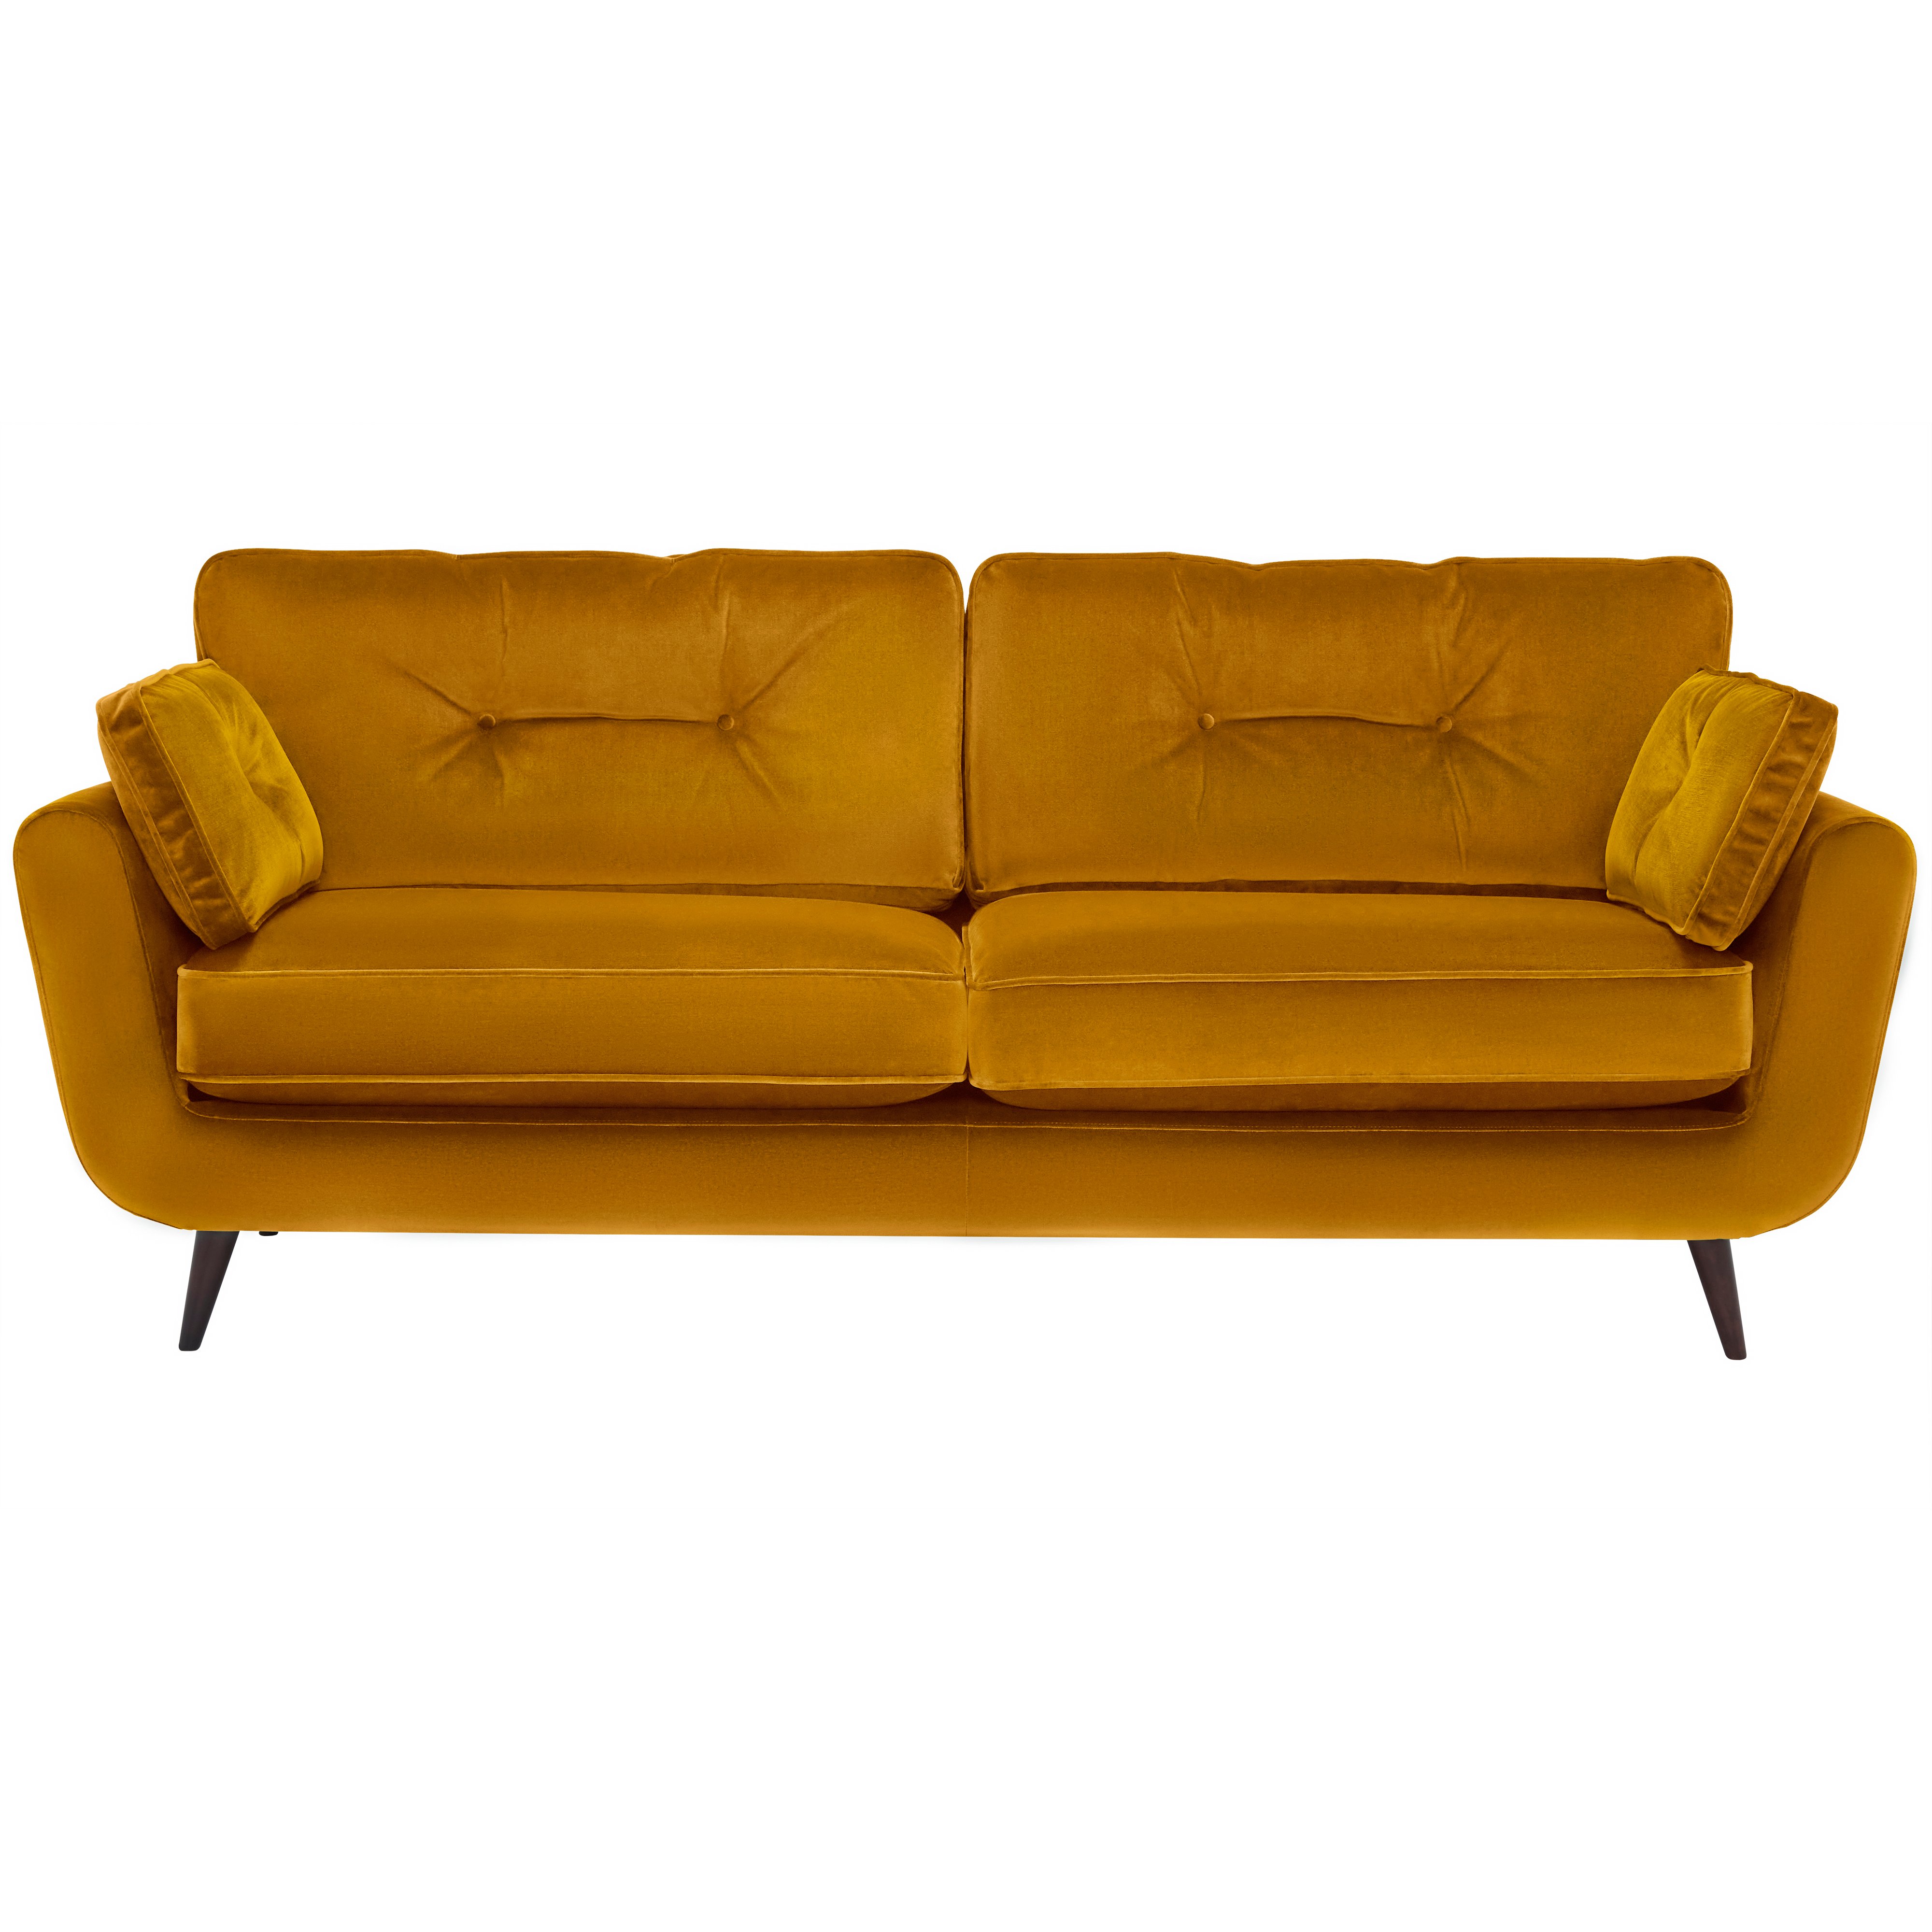 Lotus Large Sofa, Yellow Fabric | Barker & Stonehouse